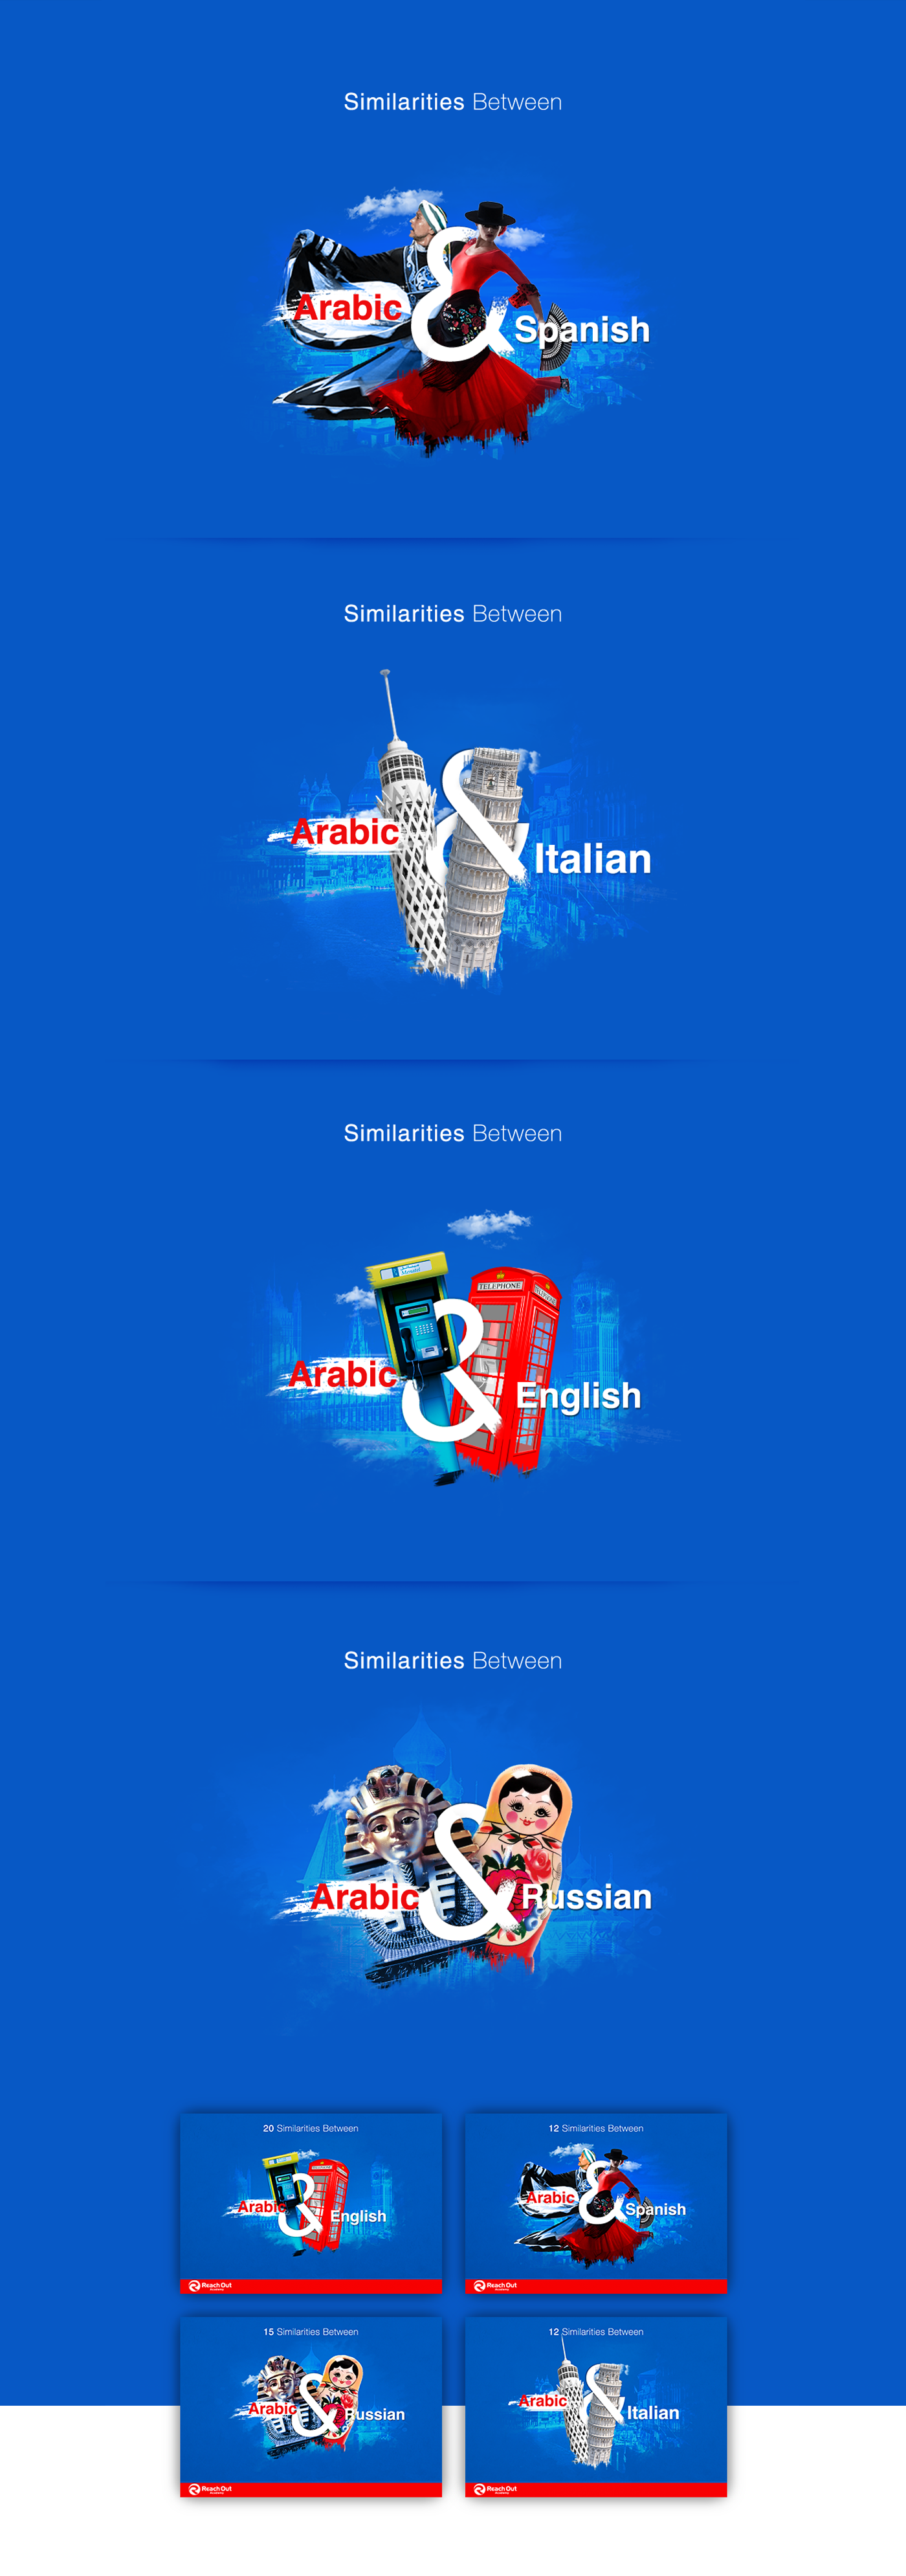 social media graphic design  arabic spanish italian english similarities Reach Out academy courses